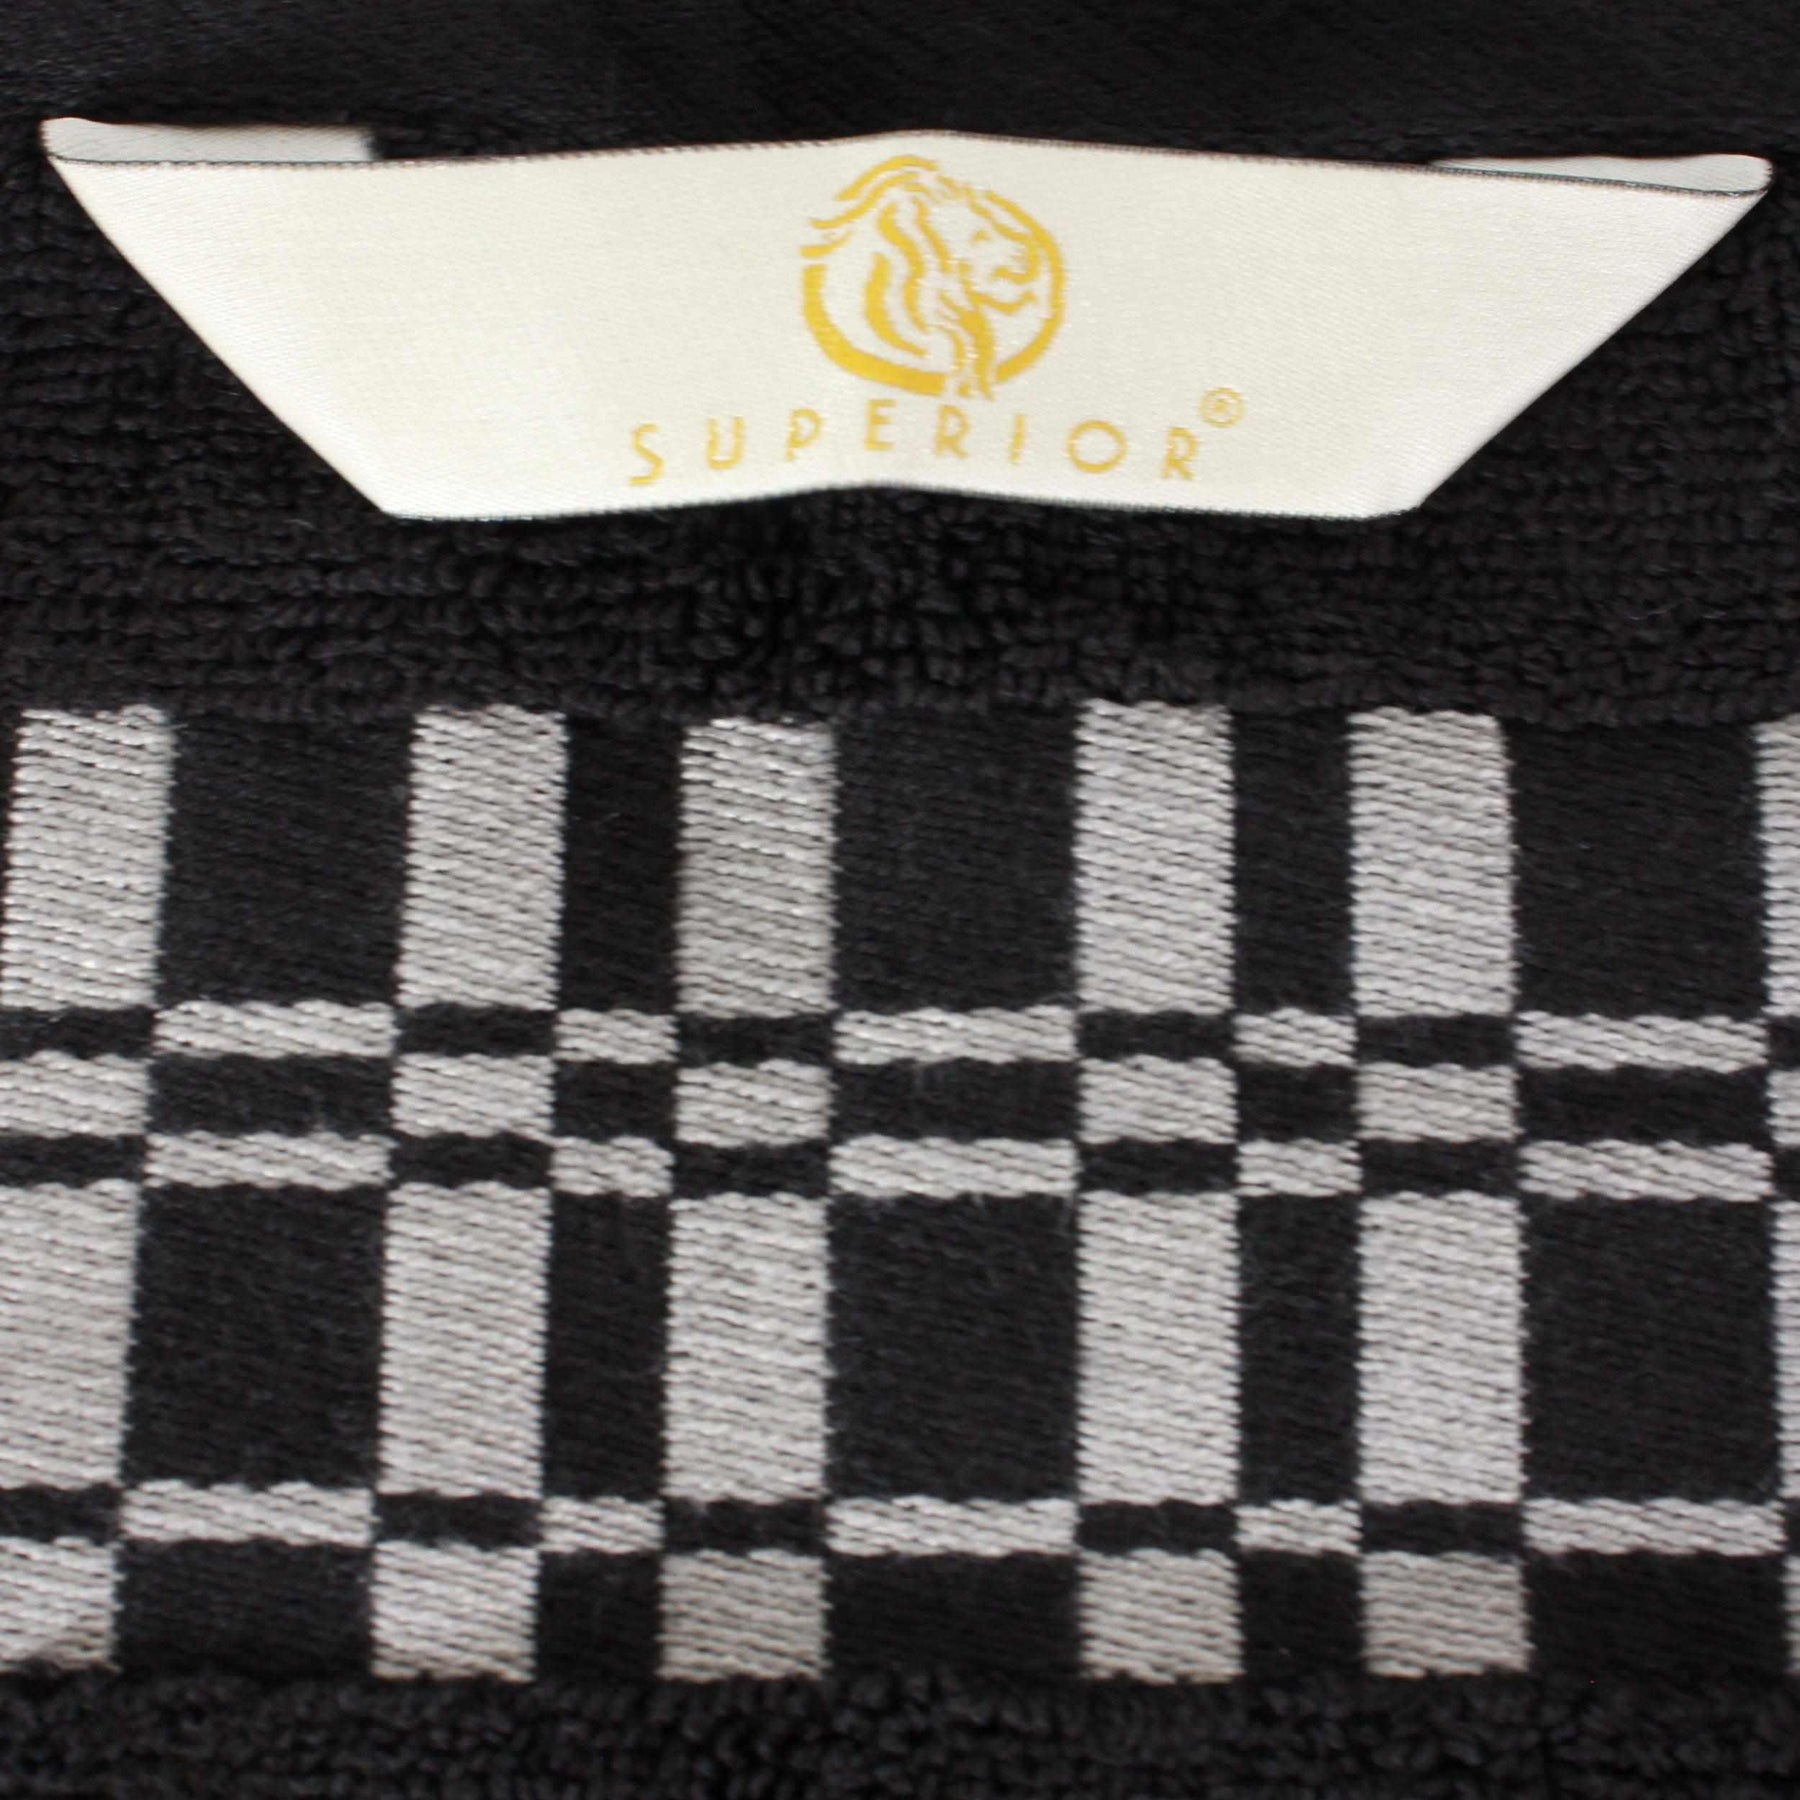  Superior Larissa Cotton 8-Piece Assorted Towel Set with Geometric Embroidered Jacquard Border - Black